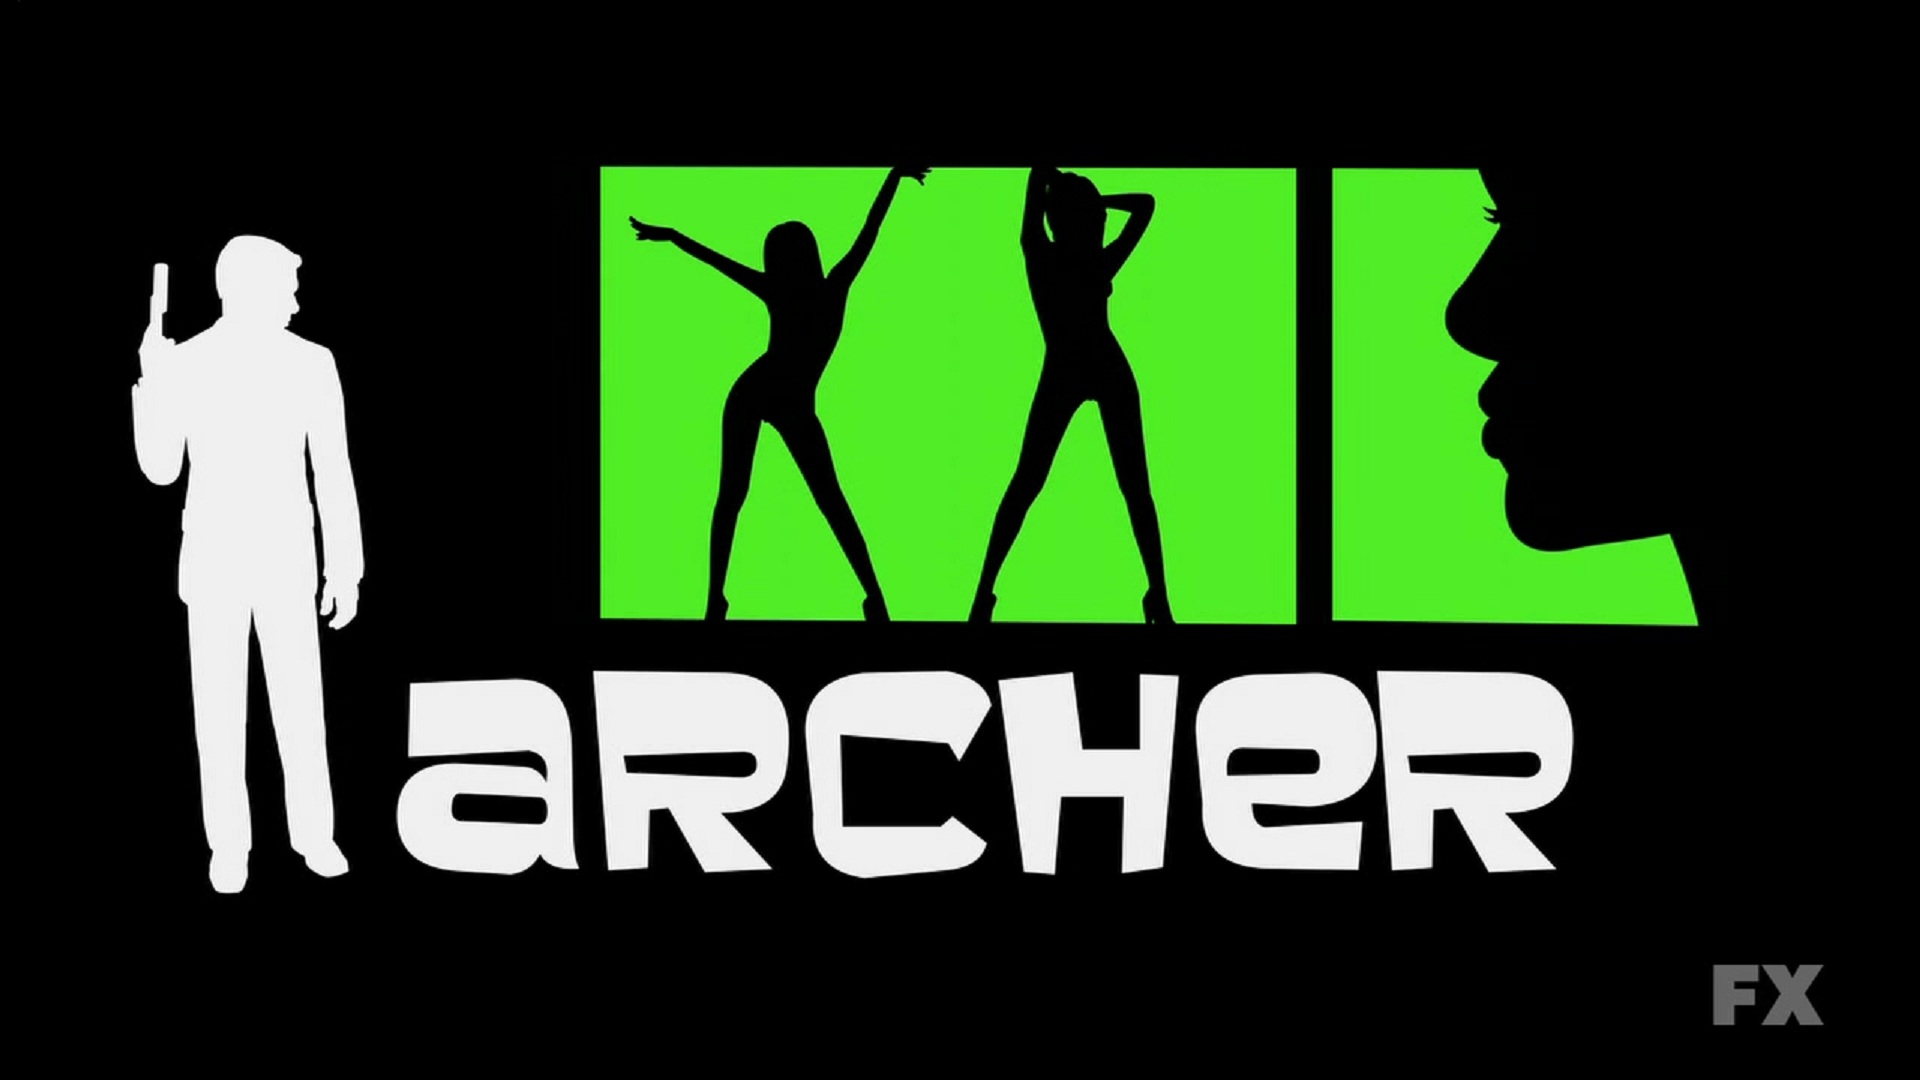 Archer Logo Jpg Photoraq